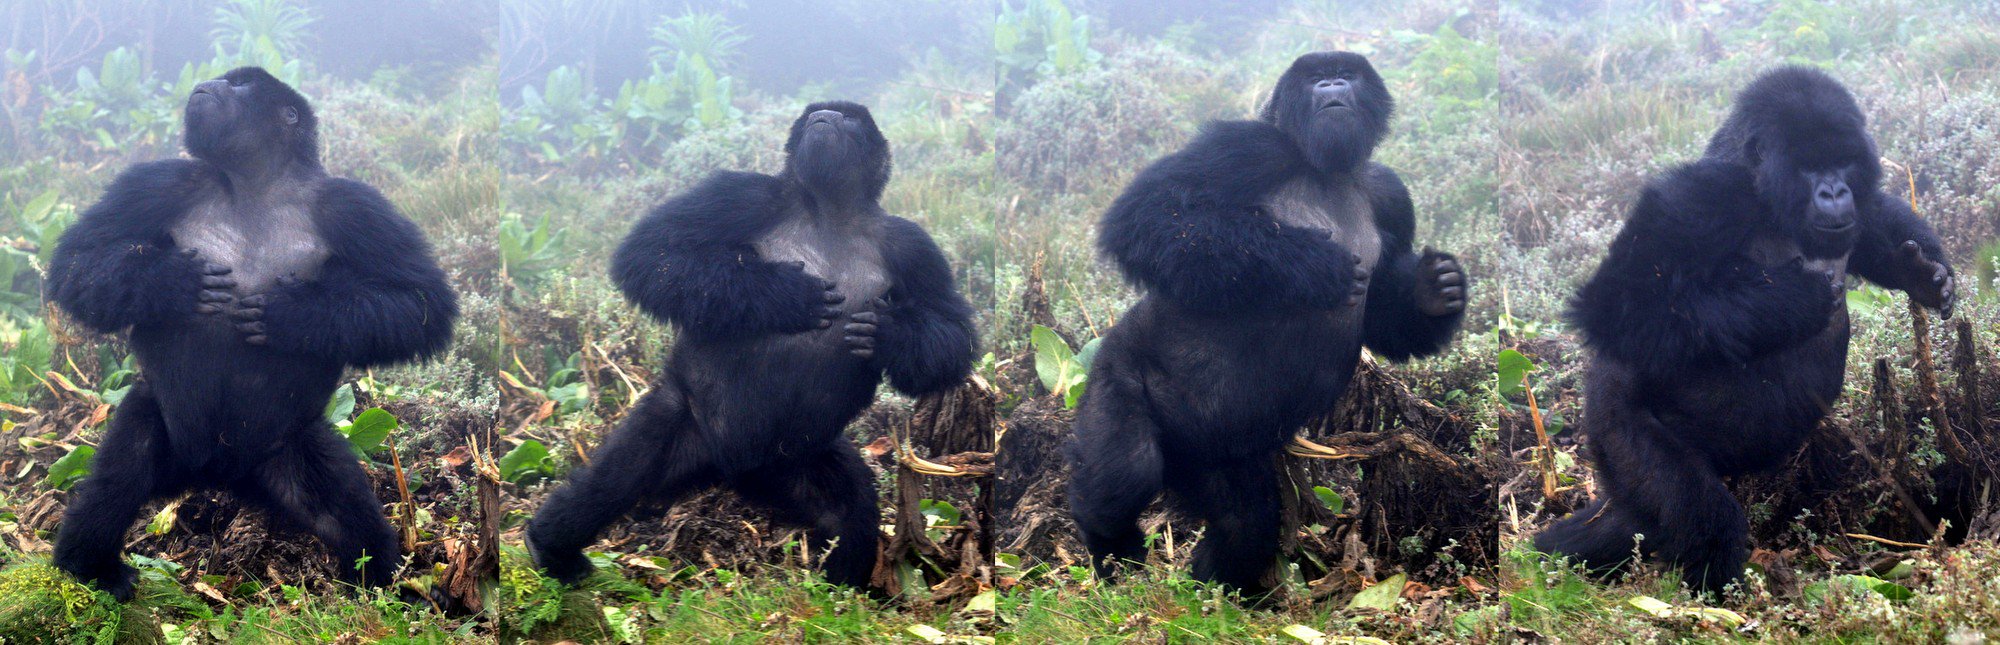 gorilla penis length